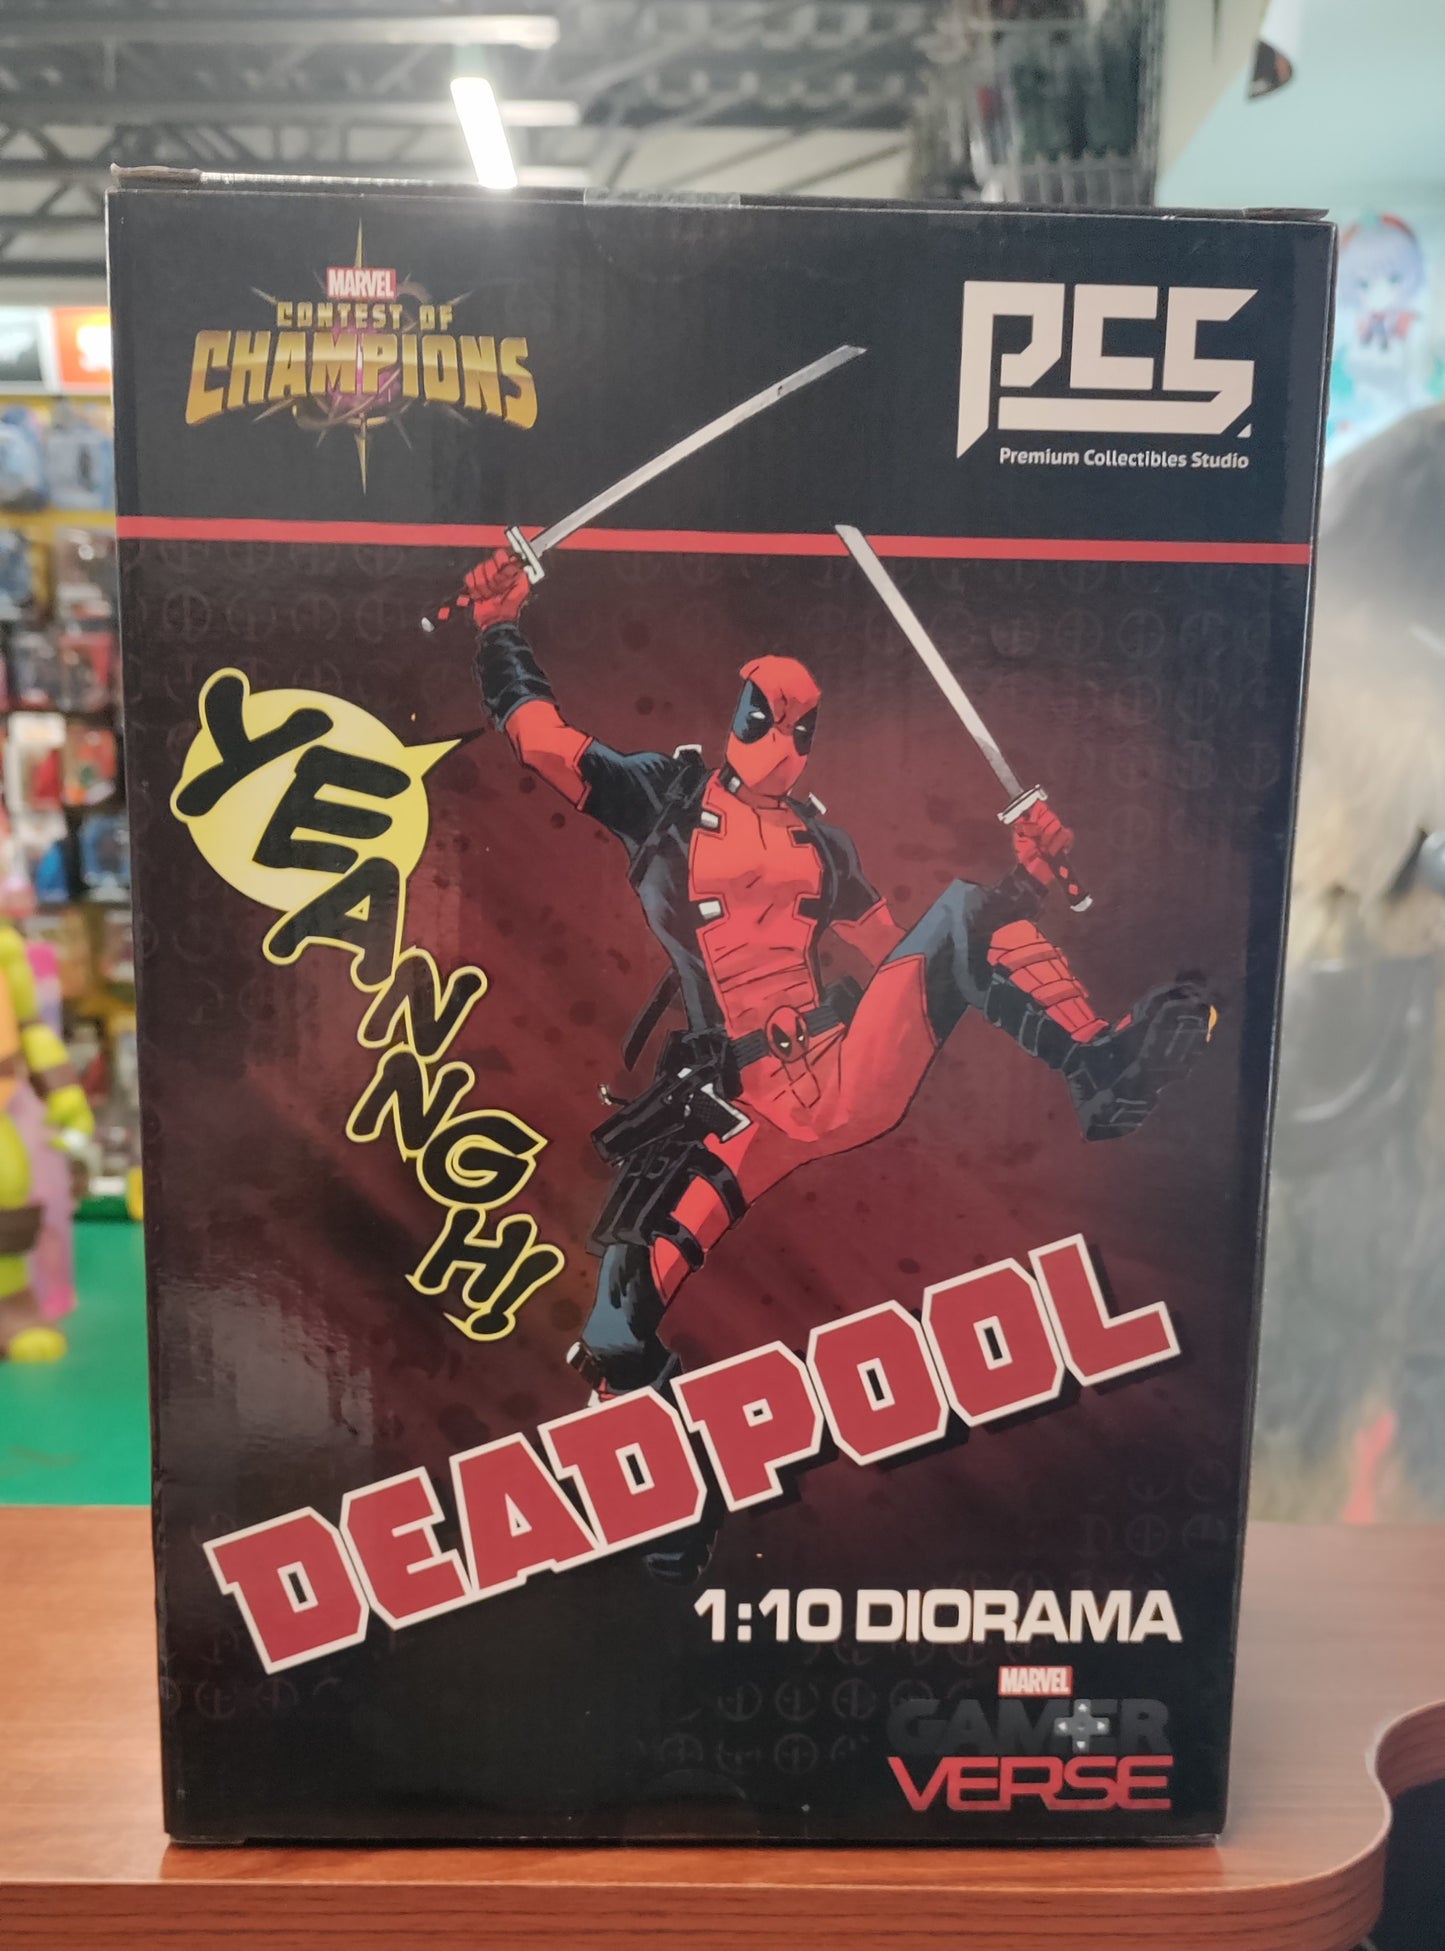 Marvel Contest of Champions Deadpool 1:10 Diorama